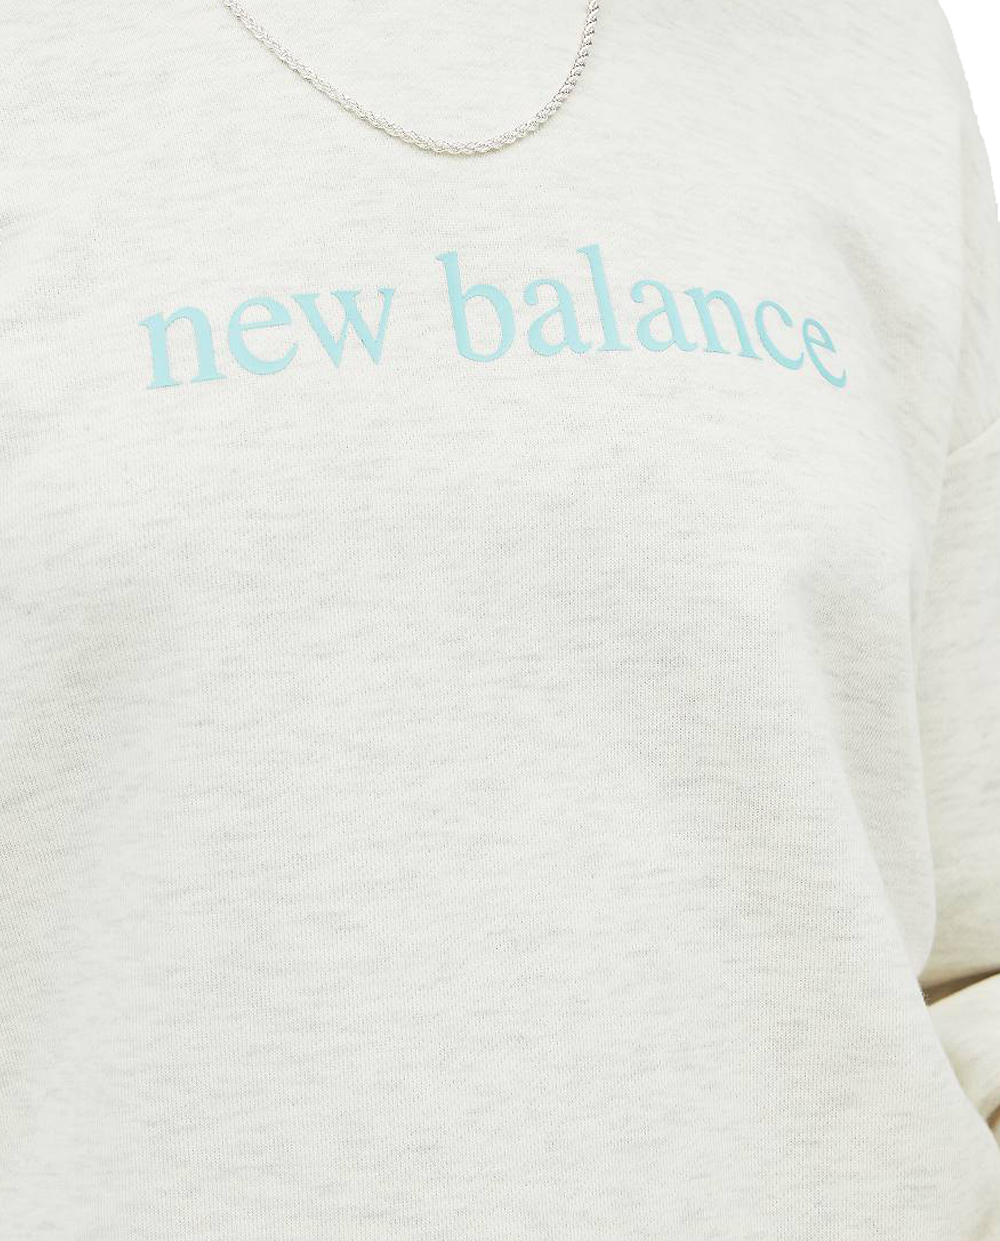 Sweatshirt New Balance Cinza